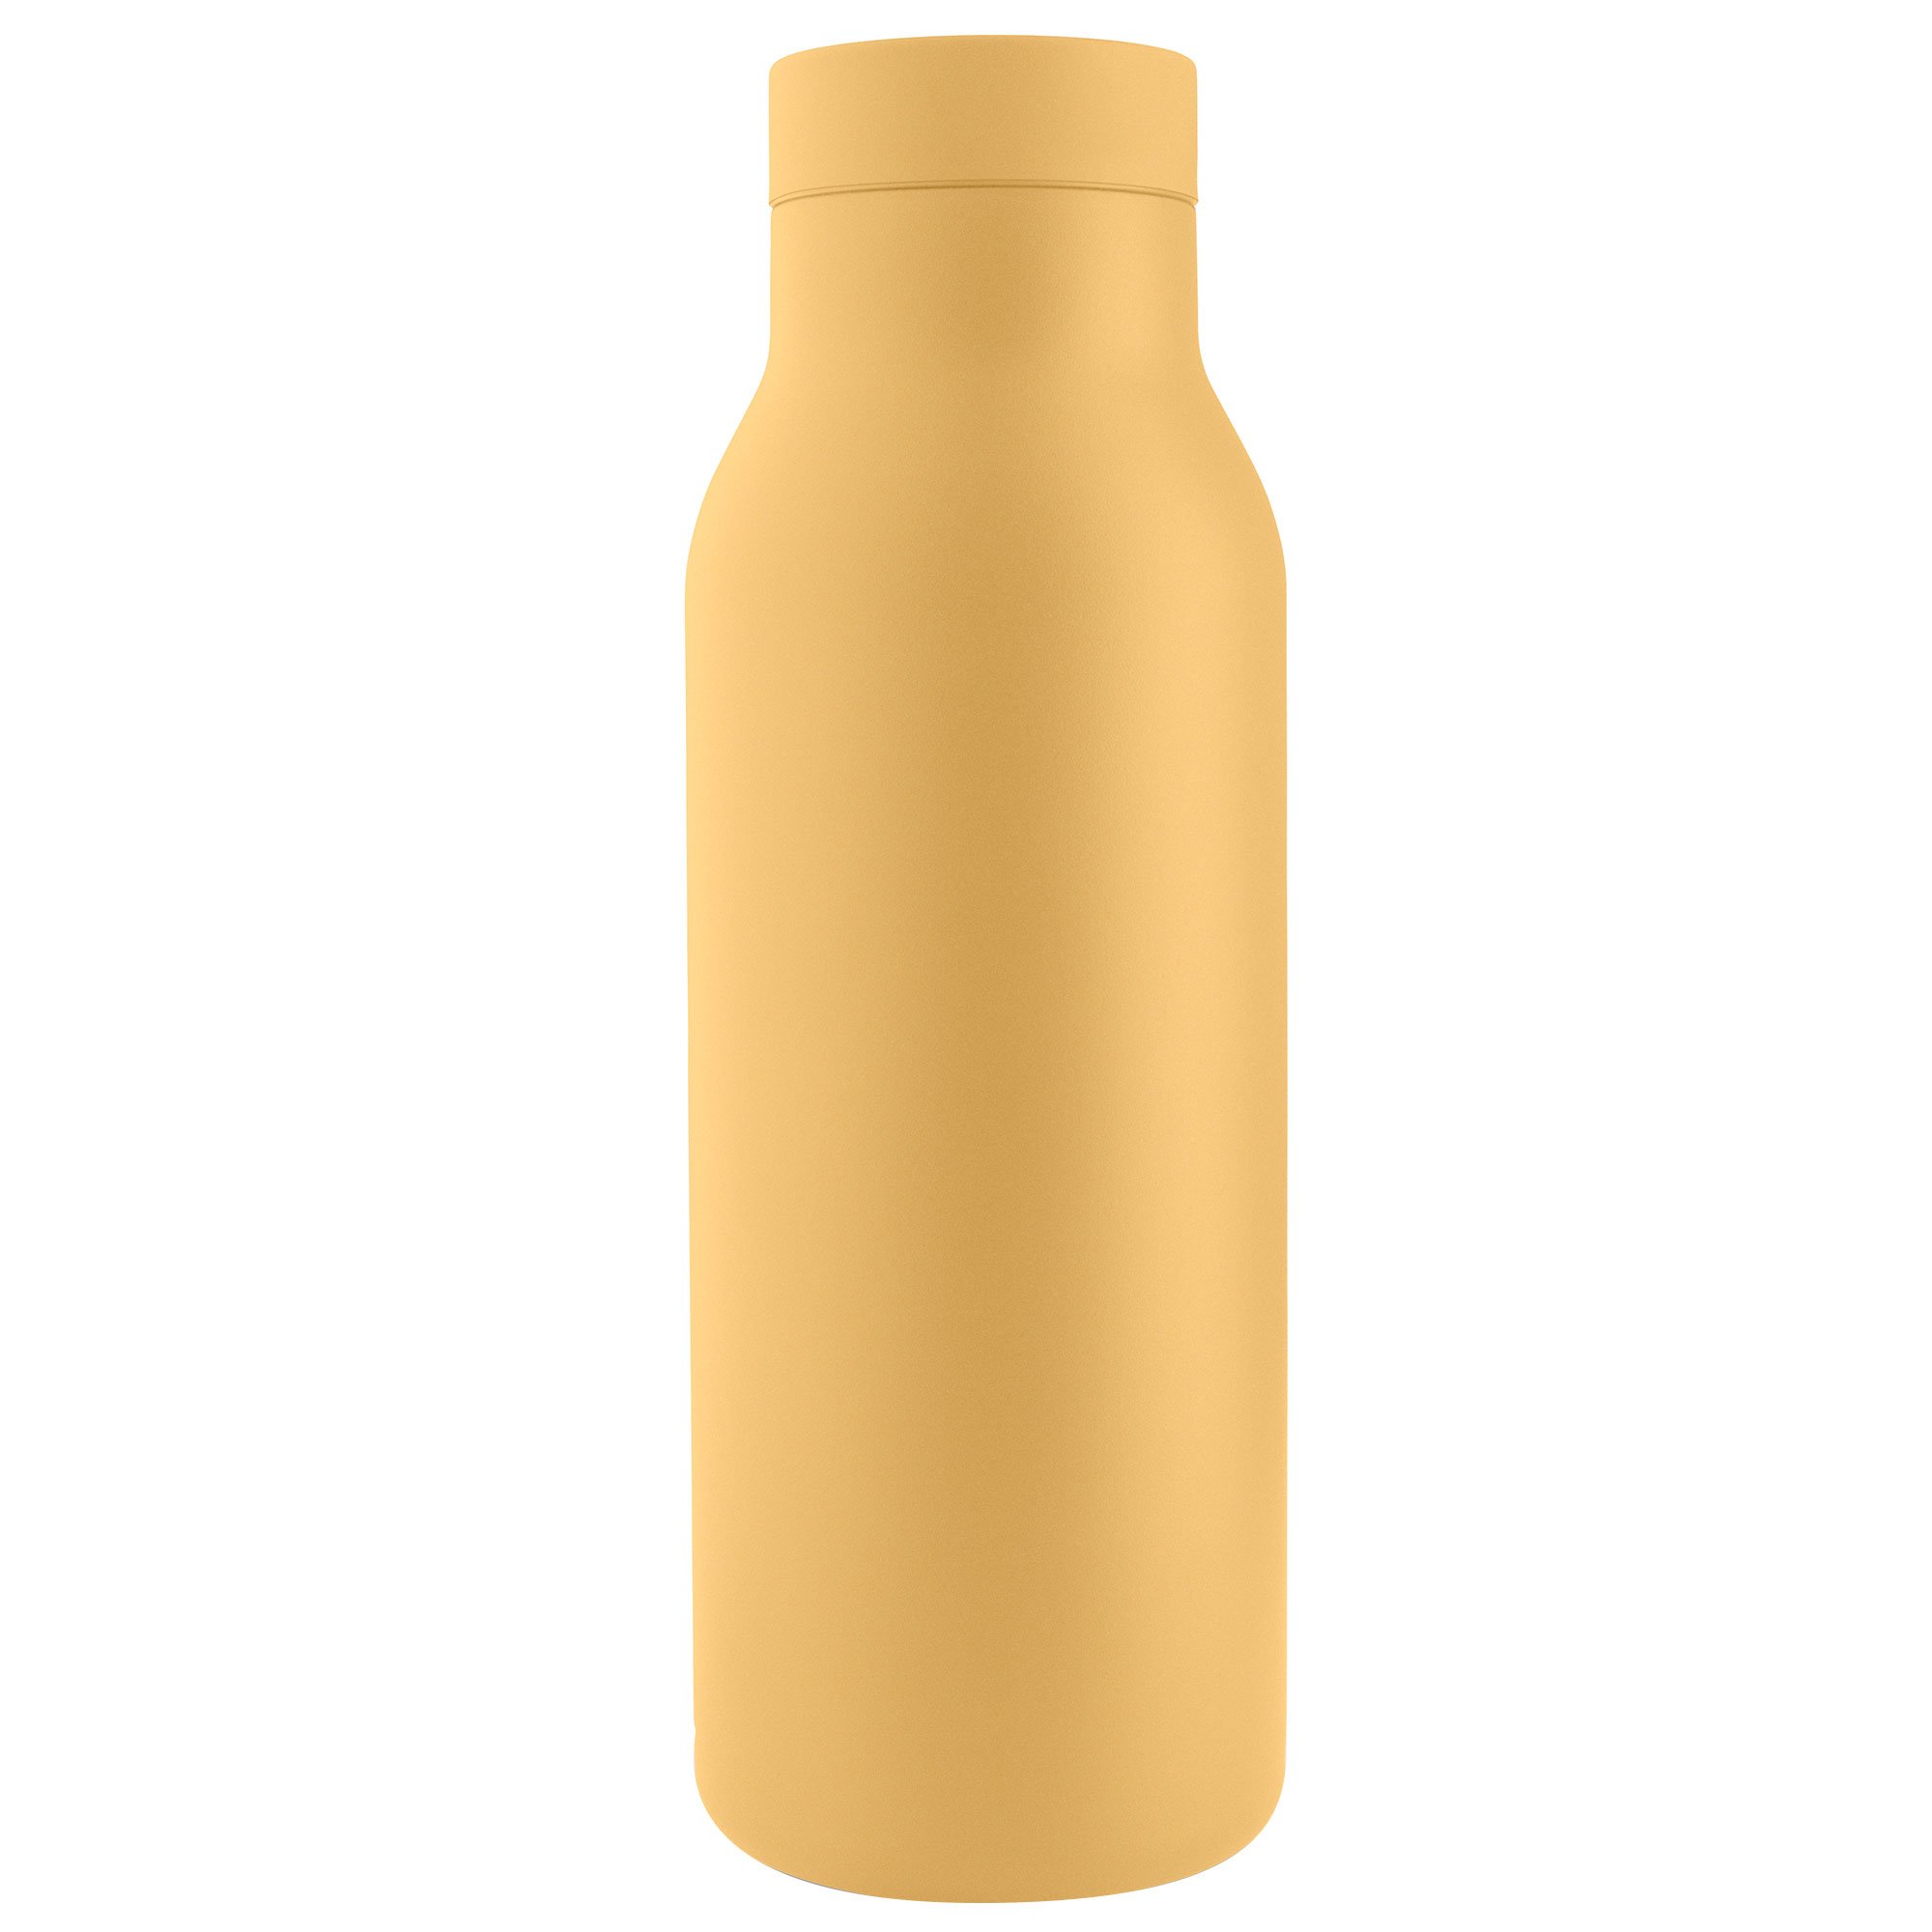 Eva Solo Urban termoflaske 0,5 liter golden sand